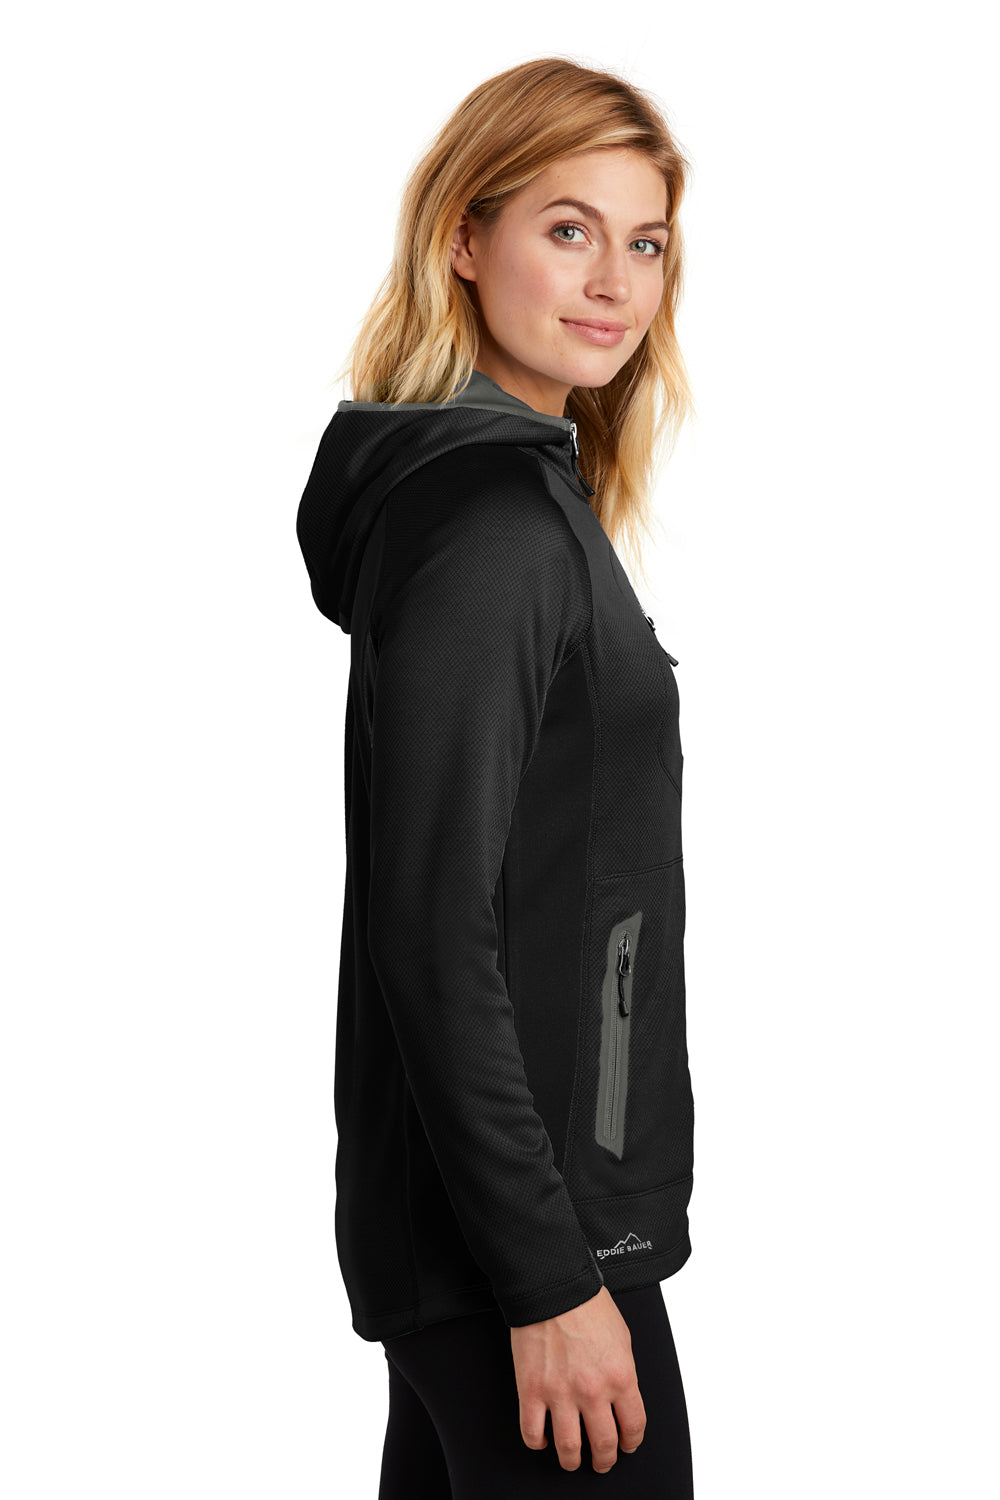 Eddie Bauer EB245 Womens Sport Full Zip Fleece Hooded Jacket Black Side